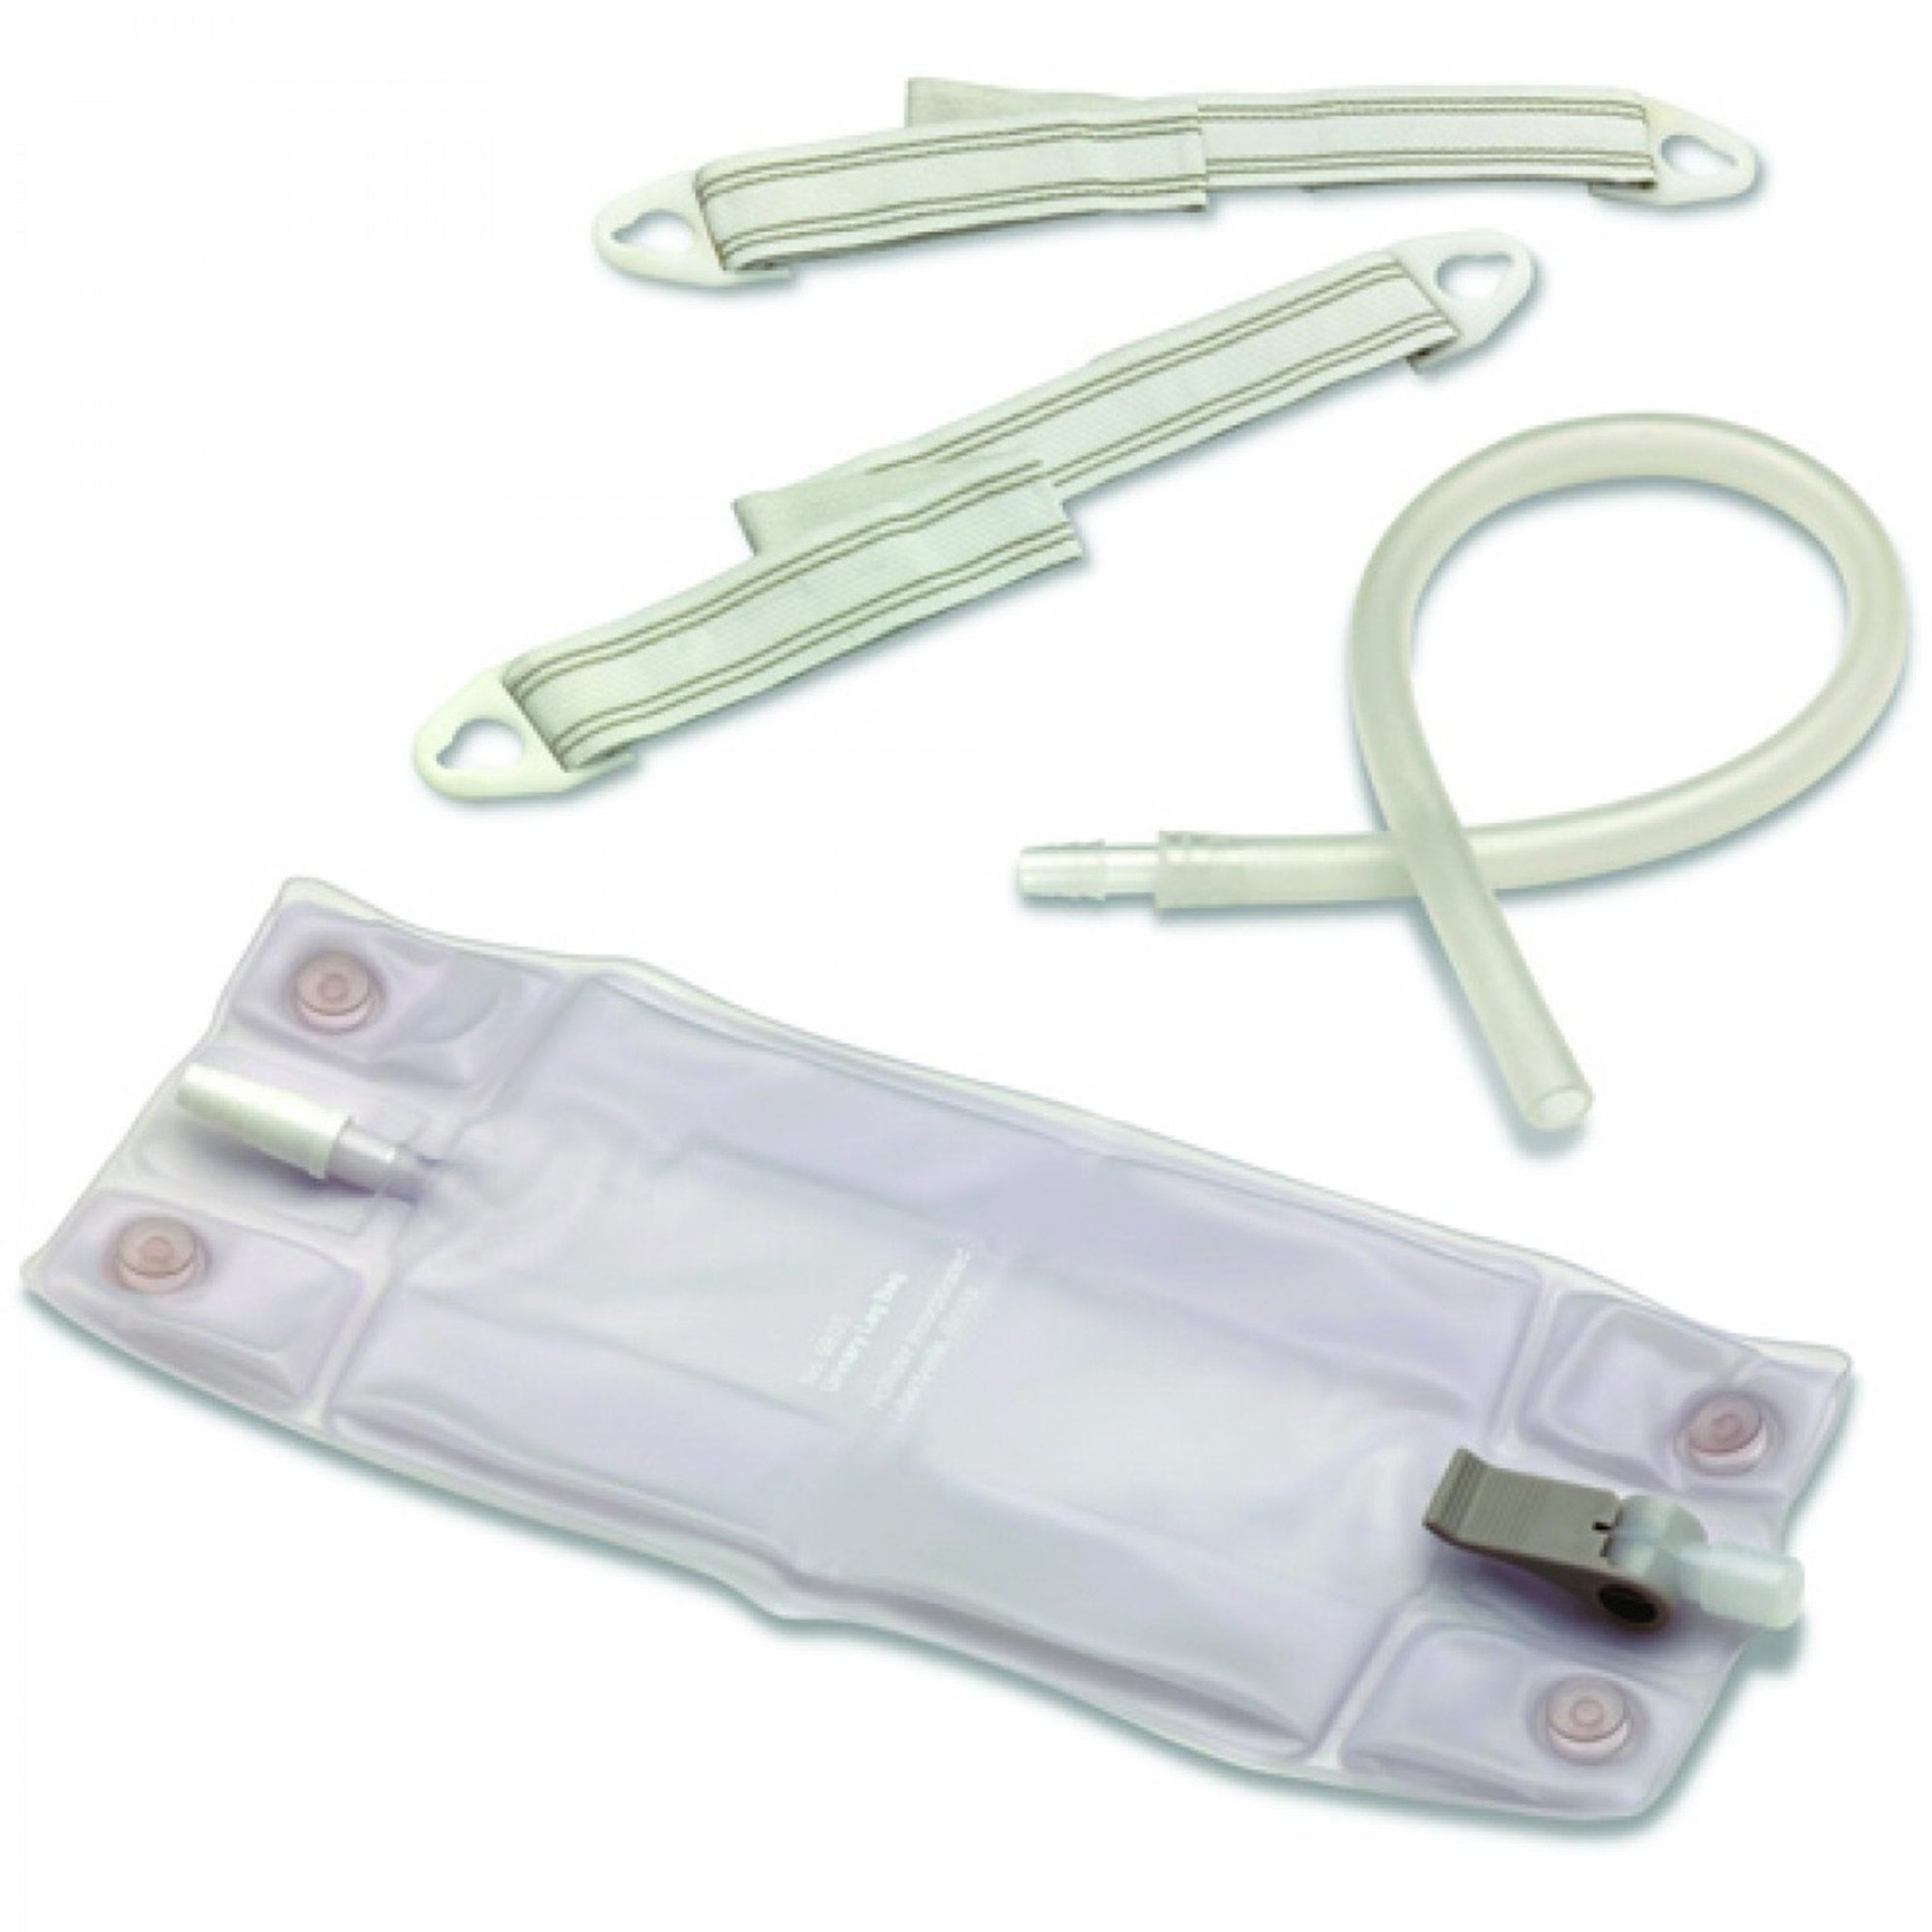 Urinary Leg Bag Kit Hollister Anti-Reflux Valve Sterile Fluid Path 900 mL Vinyl